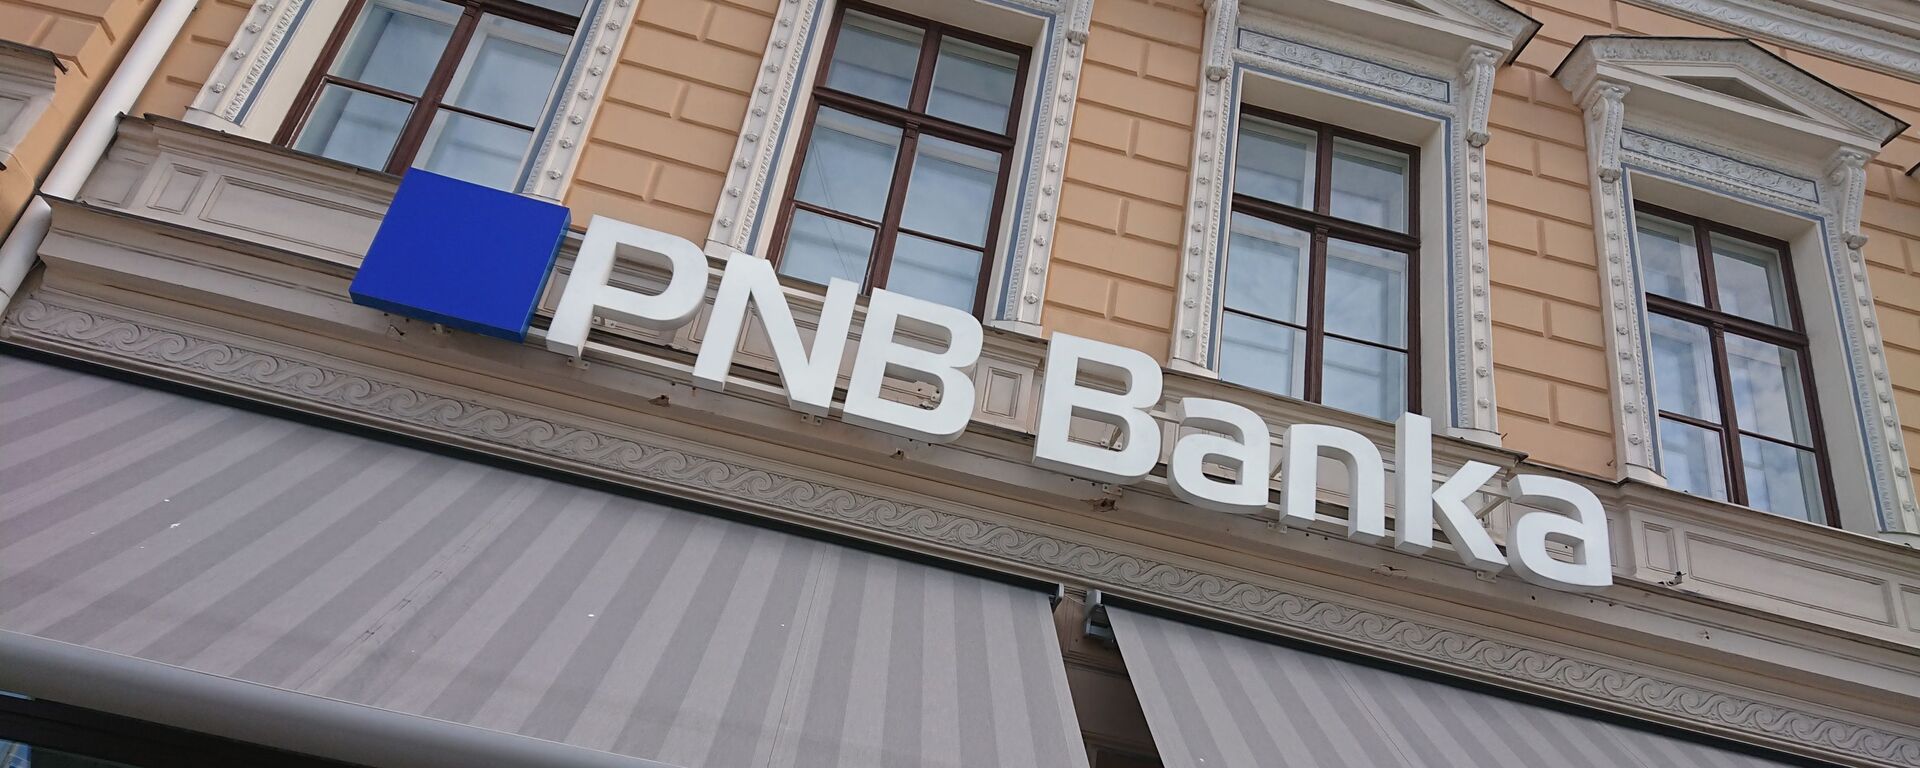 PNB Banka в Риге - Sputnik Латвия, 1920, 18.06.2021